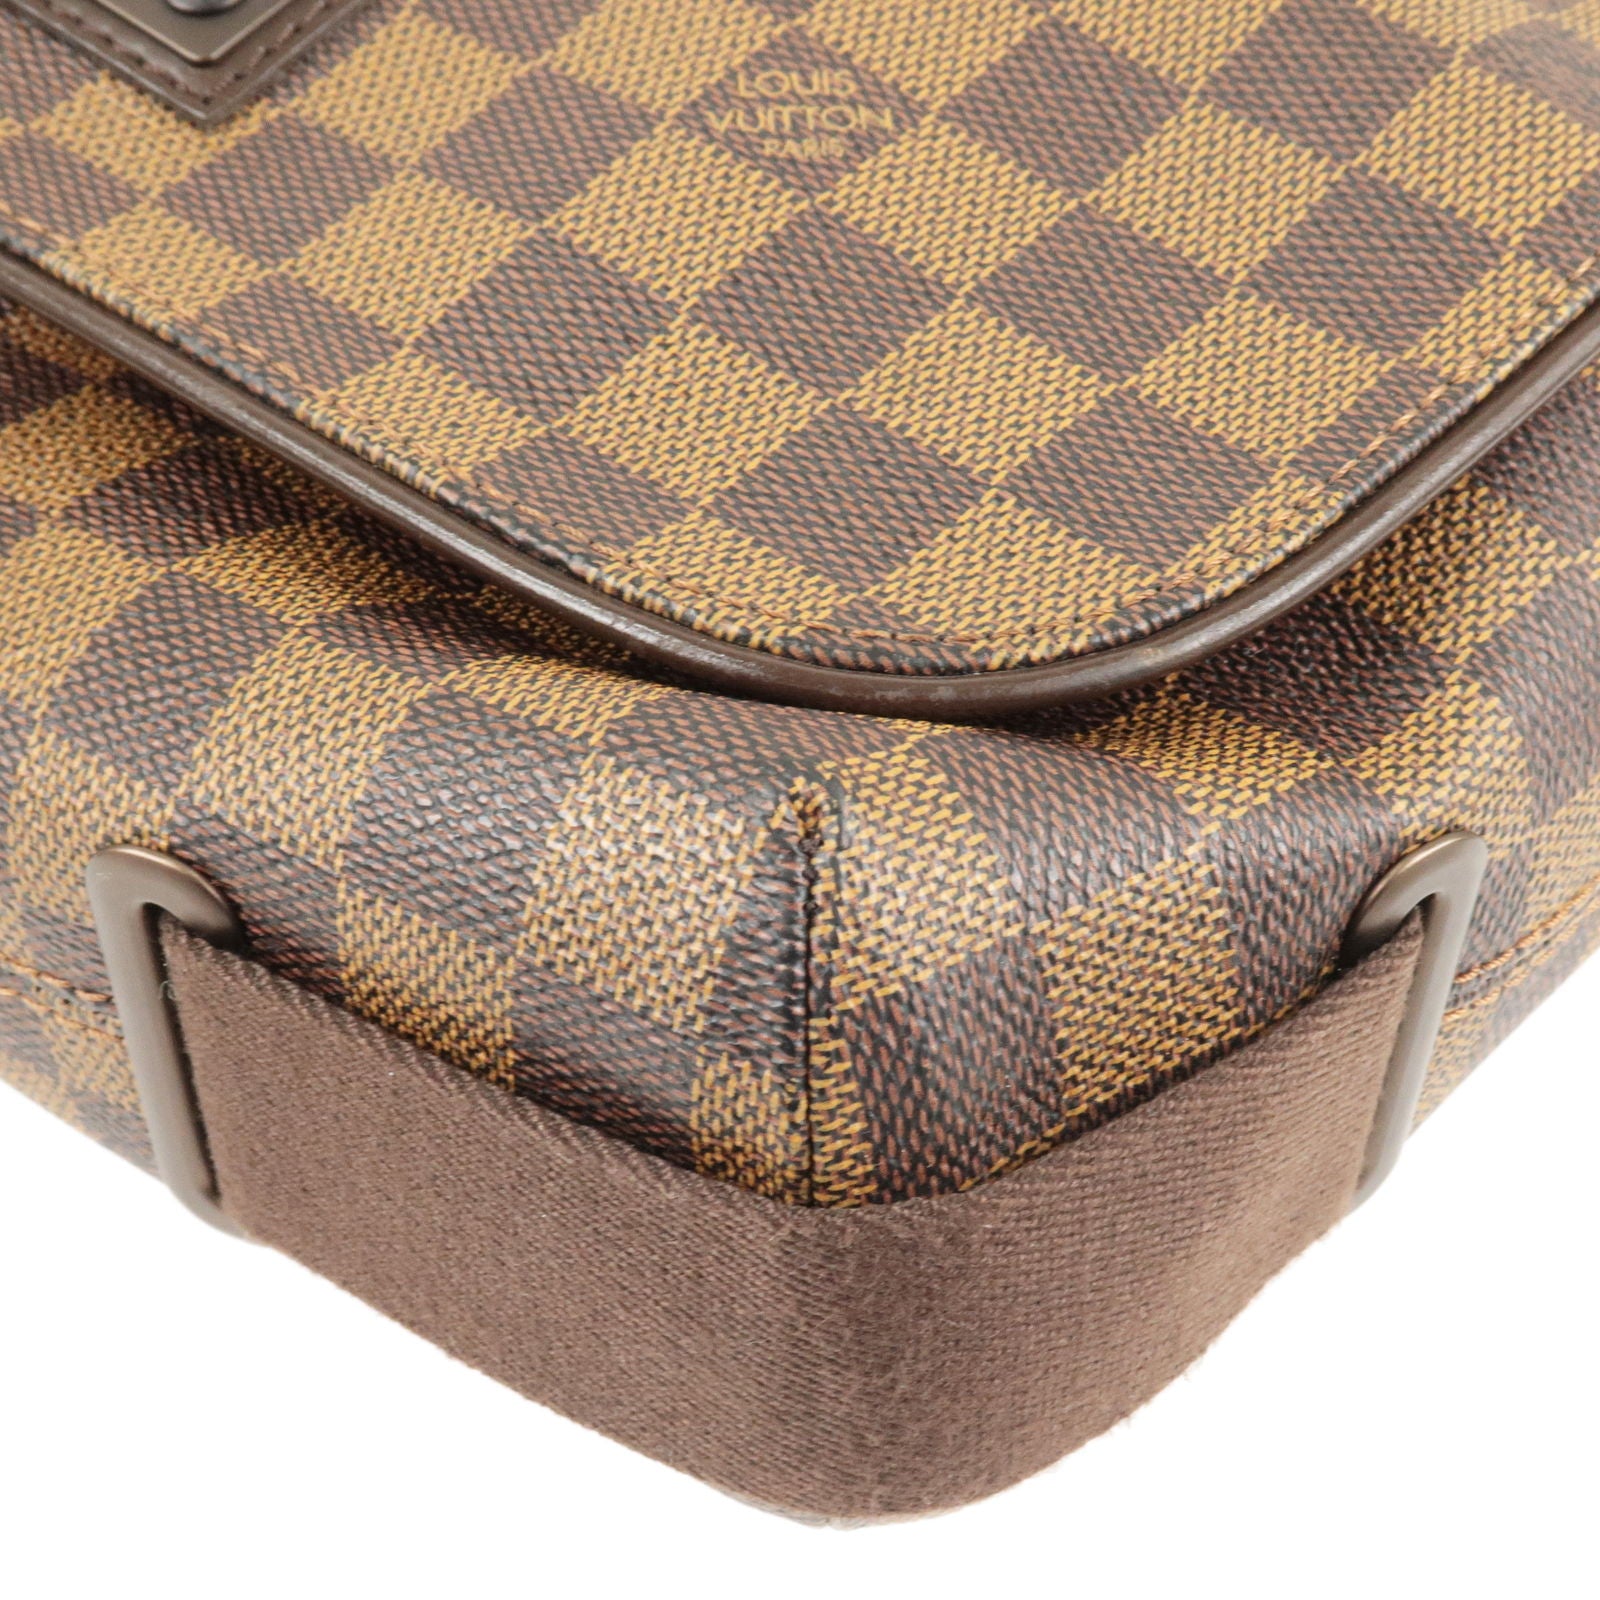 Louis-Vuitton-Damier-Ebene-Brooklyn-MM-Messenger-Bag-N51211 –  dct-ep_vintage luxury Store